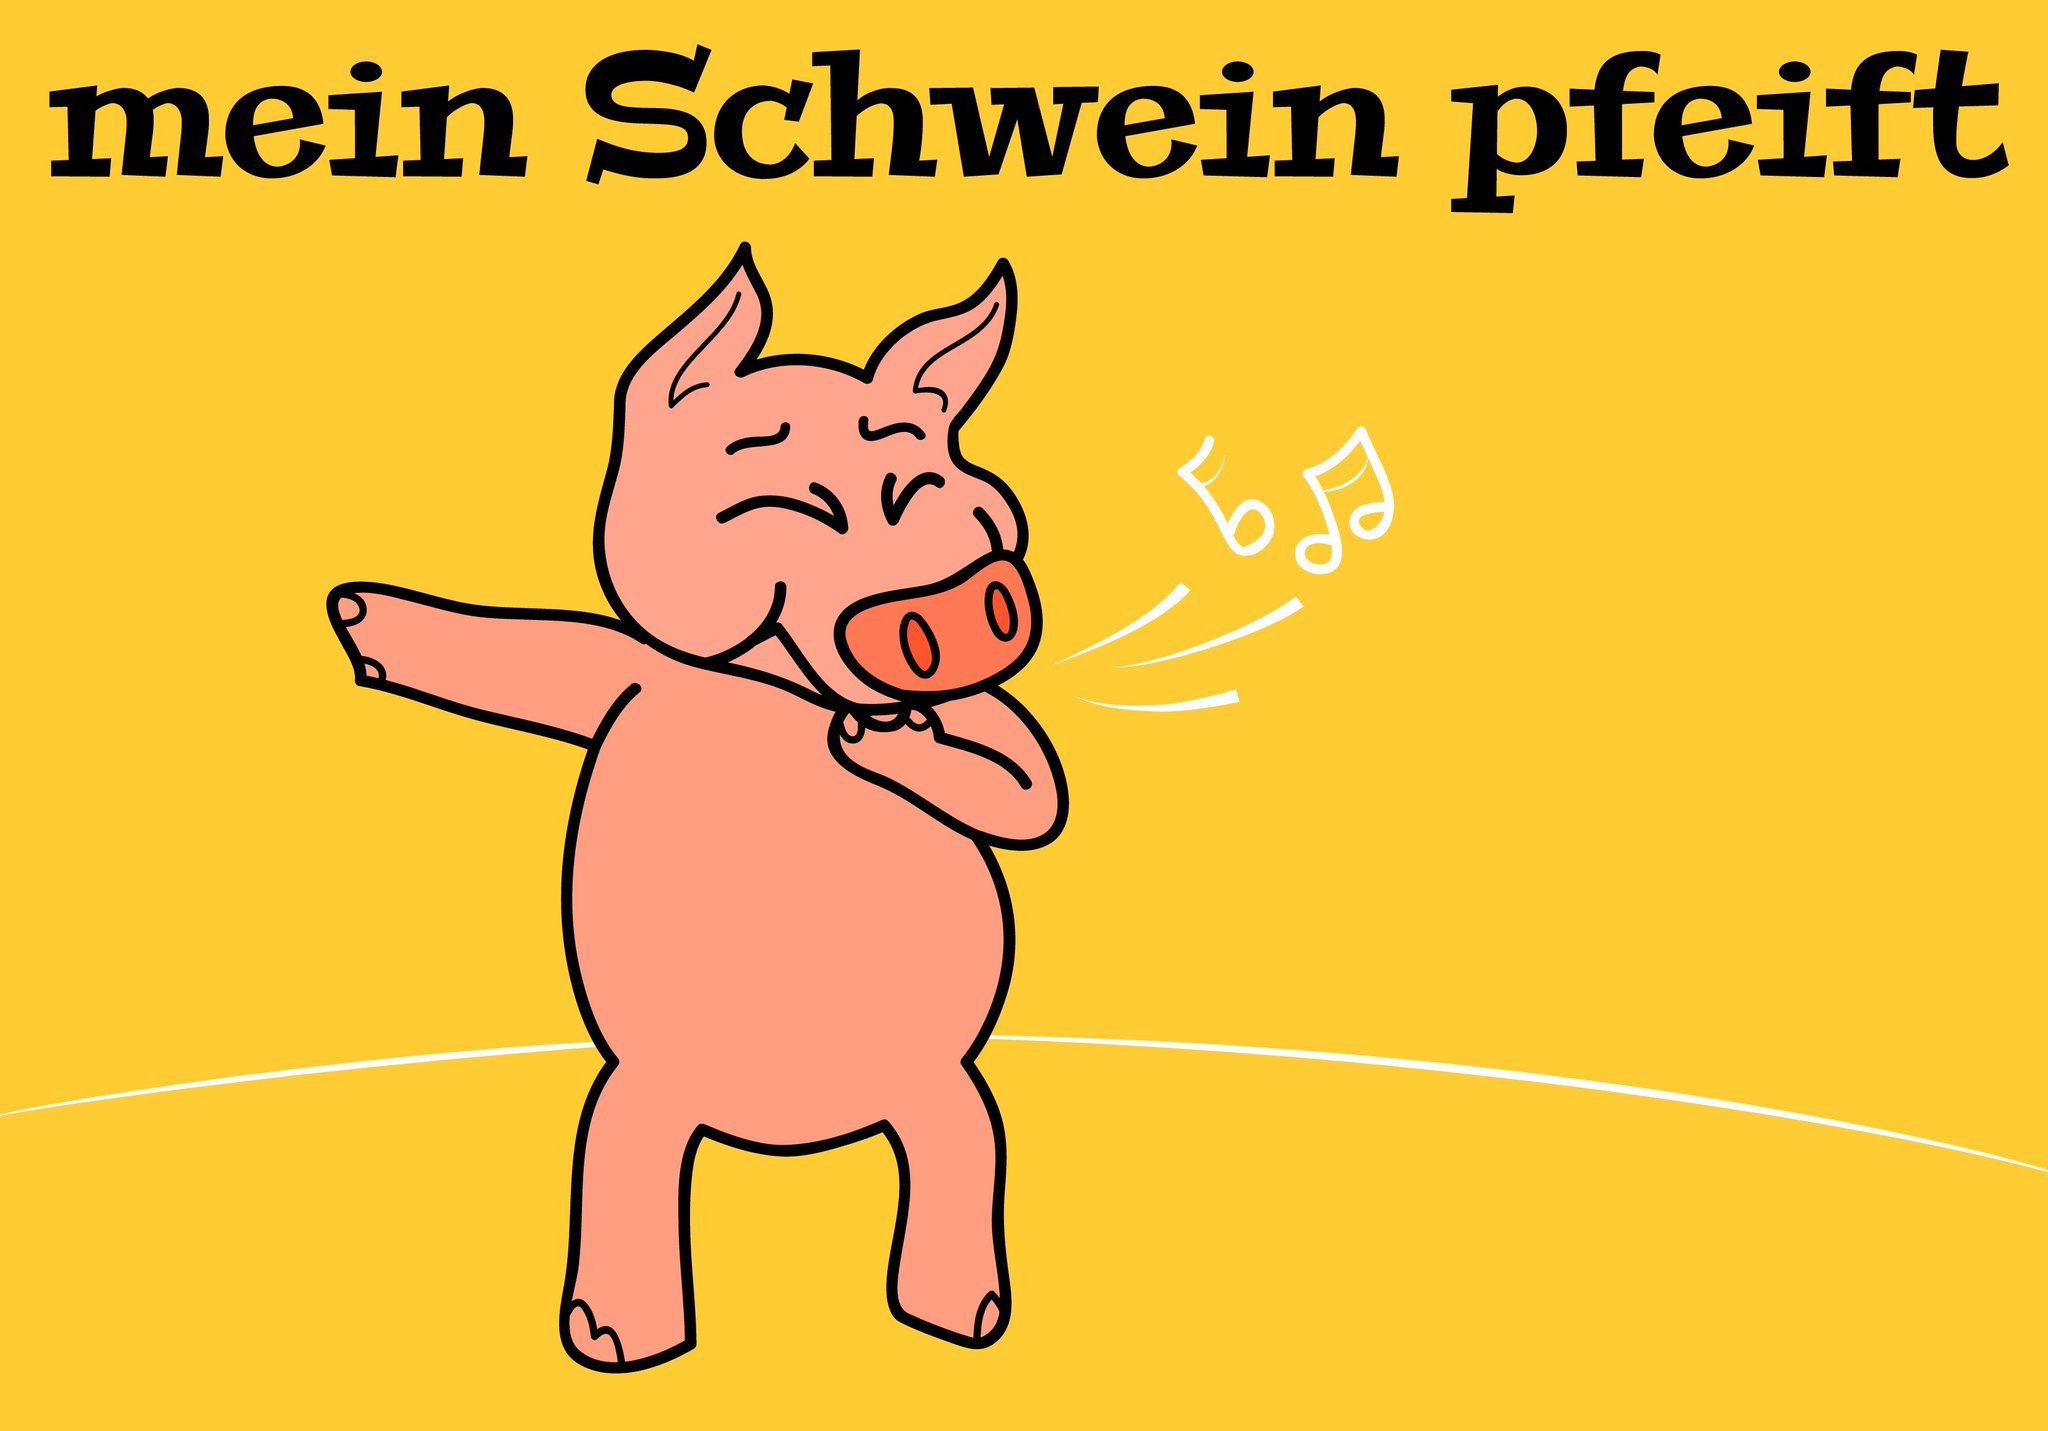 HYG - Learn German on Twitter: "Ich glaube, mein Schwein pfeift! 😮 🐷...